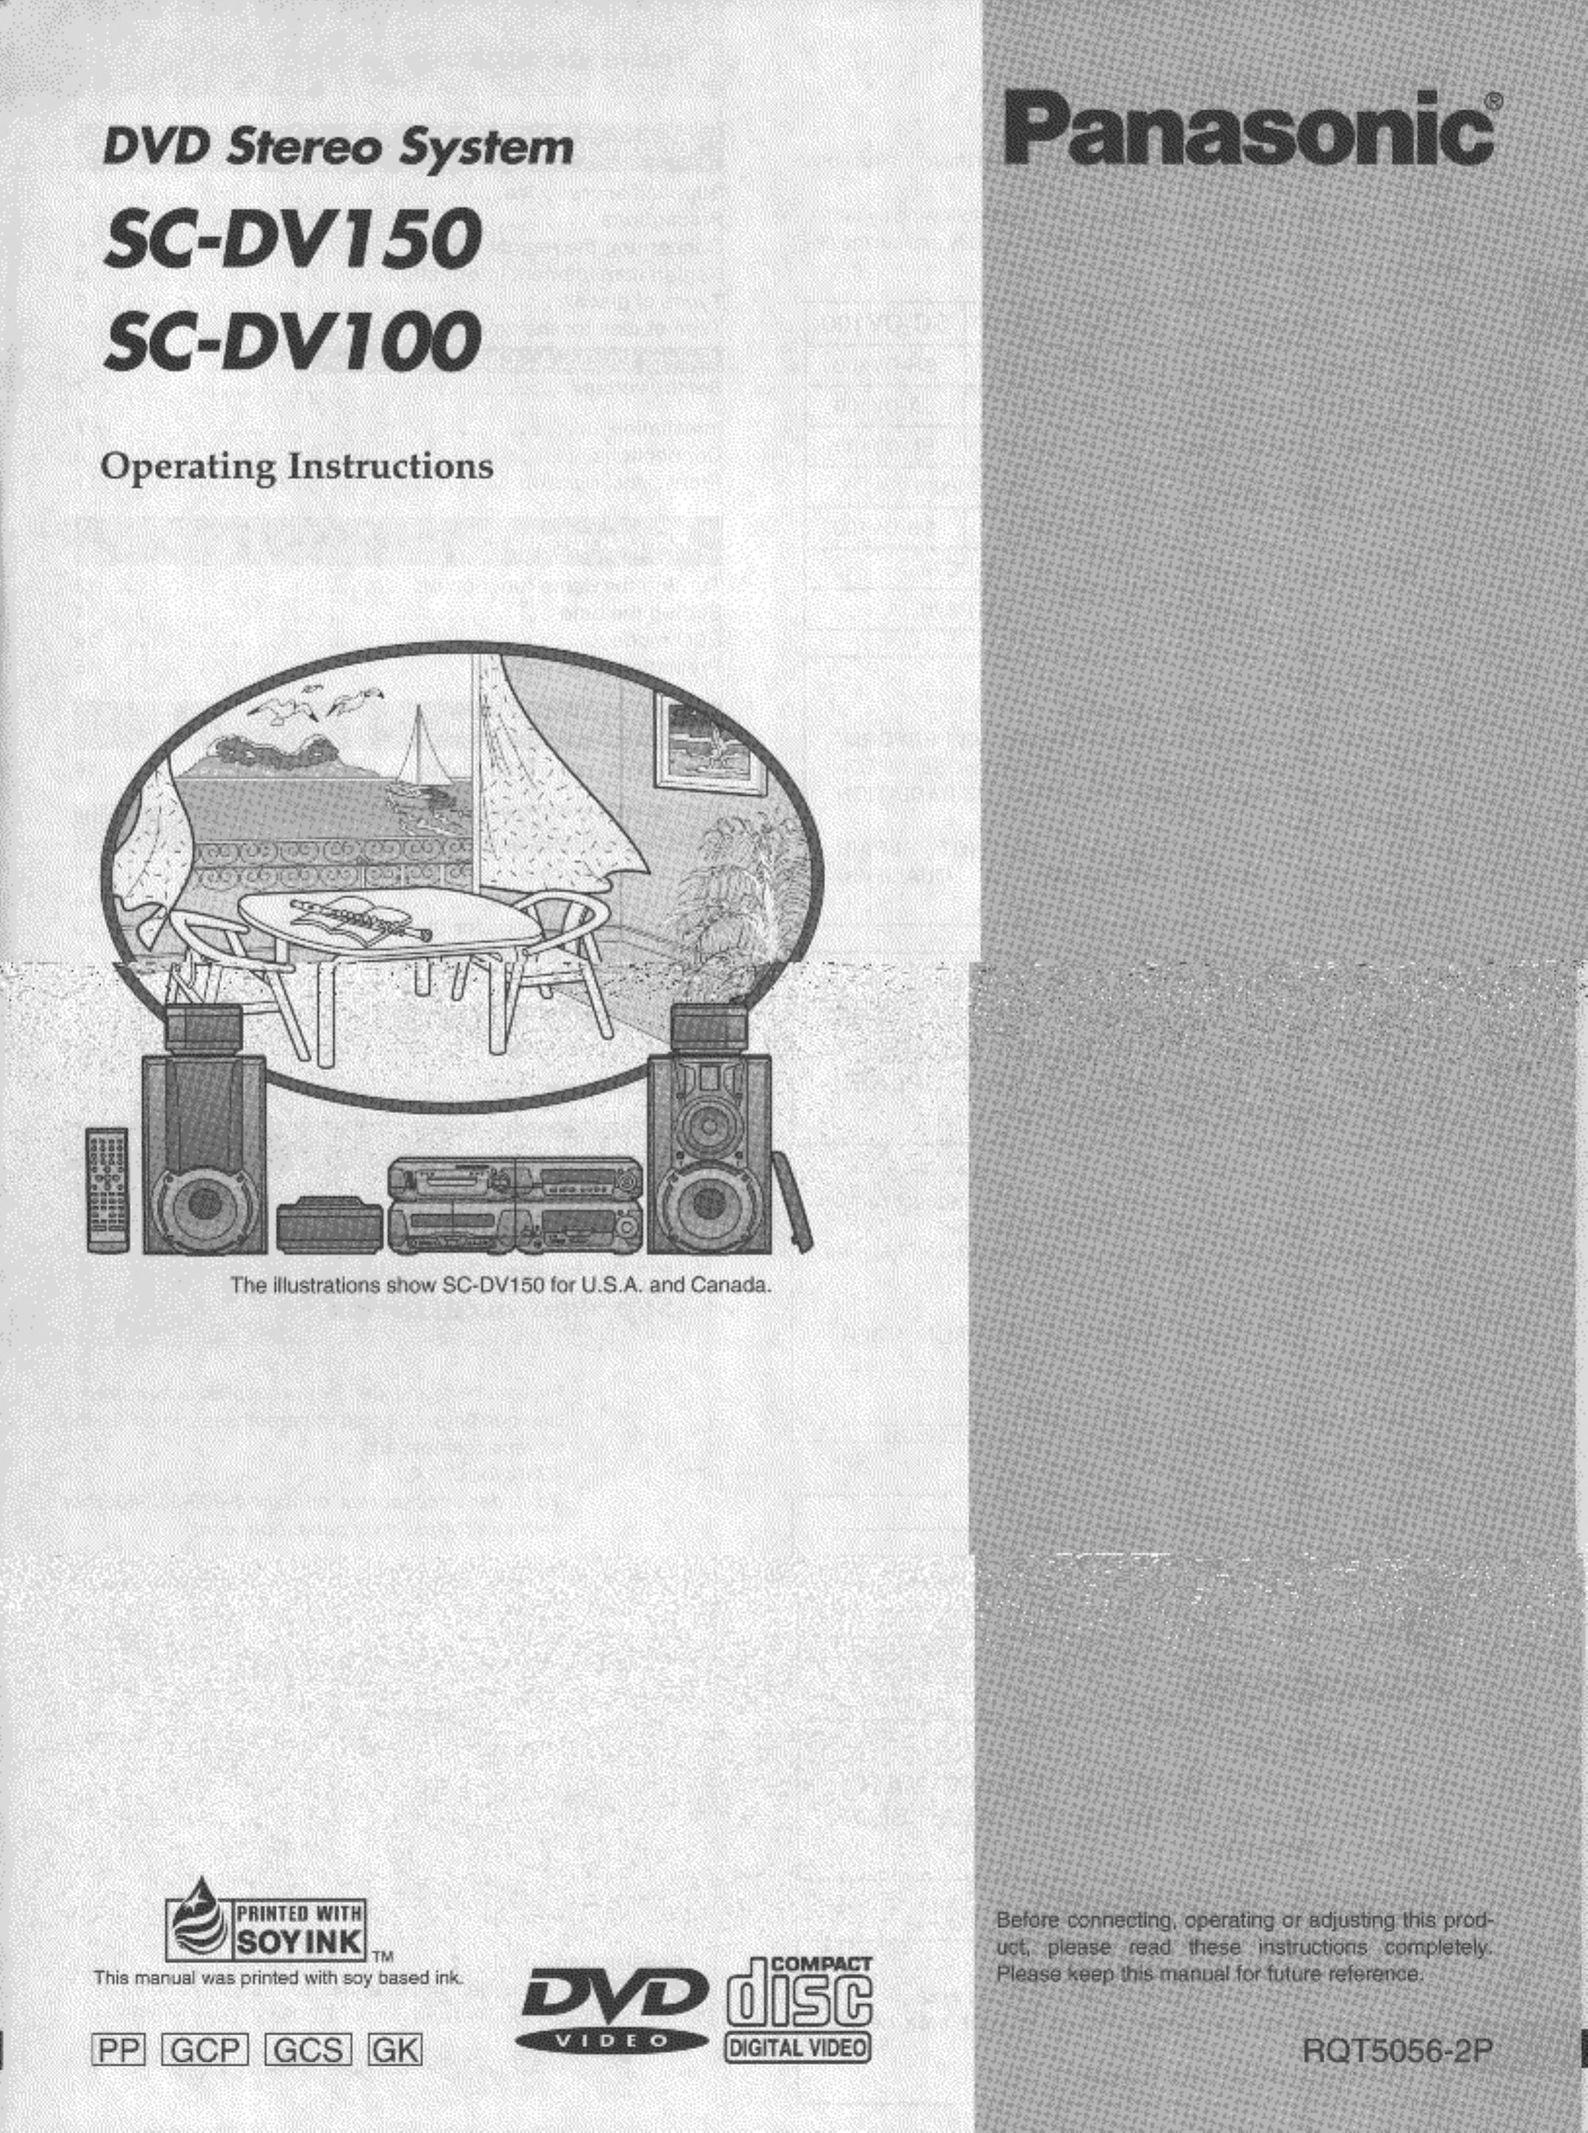 Panasonic SC-DV100 Speaker System User Manual